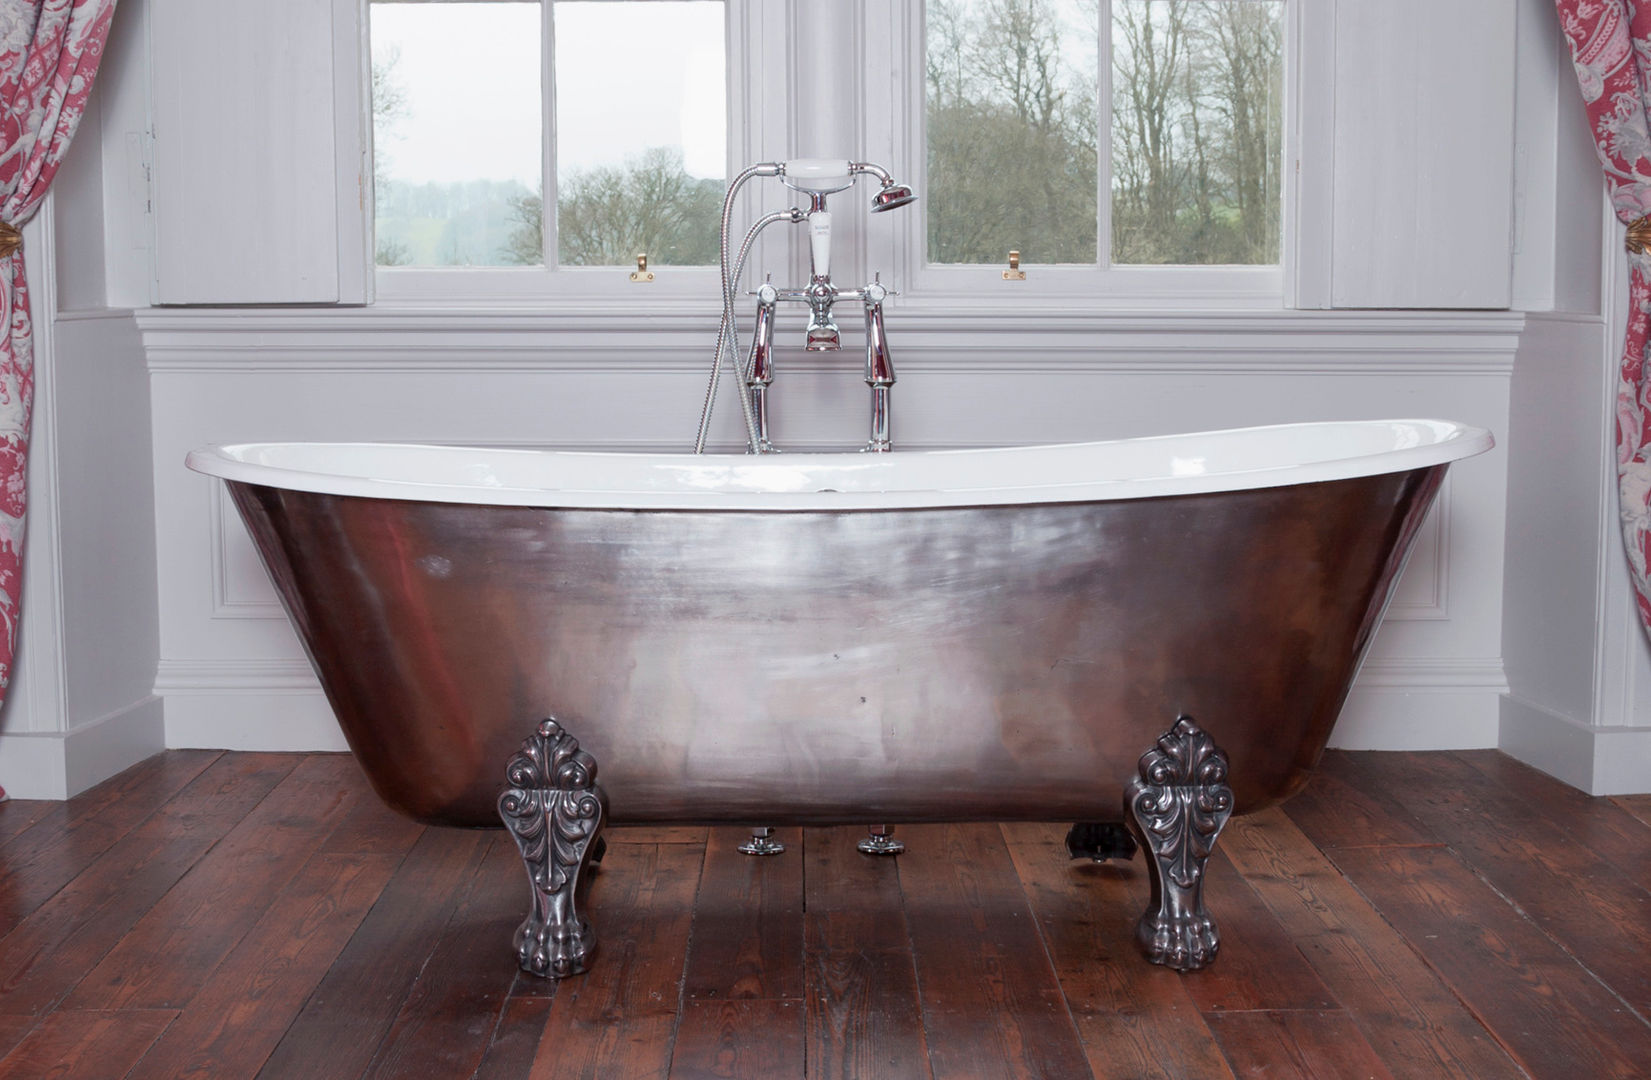 Schooner Cast Iron Bath with Hand Polished Exterior & Feet Hurlingham Baths Ванная в классическом стиле